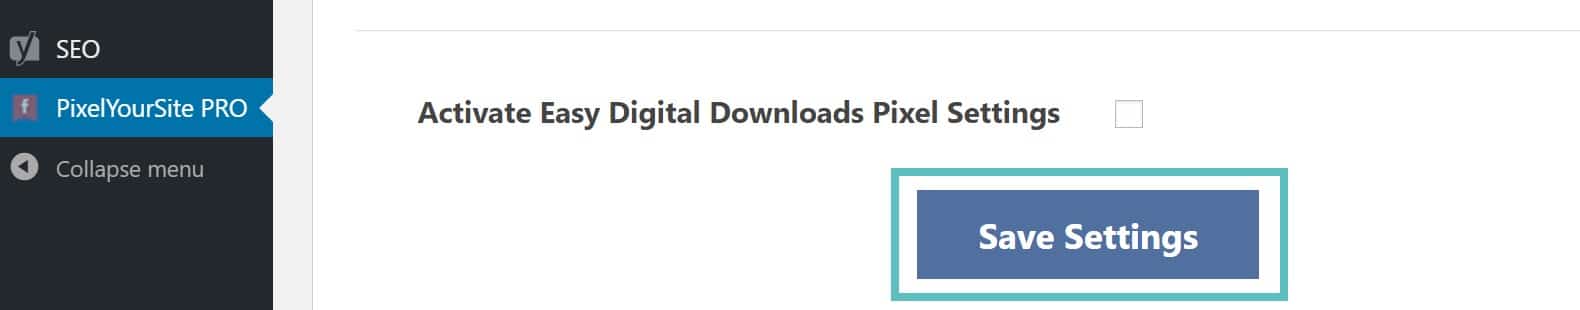 activate easy digital downloads pixel settings